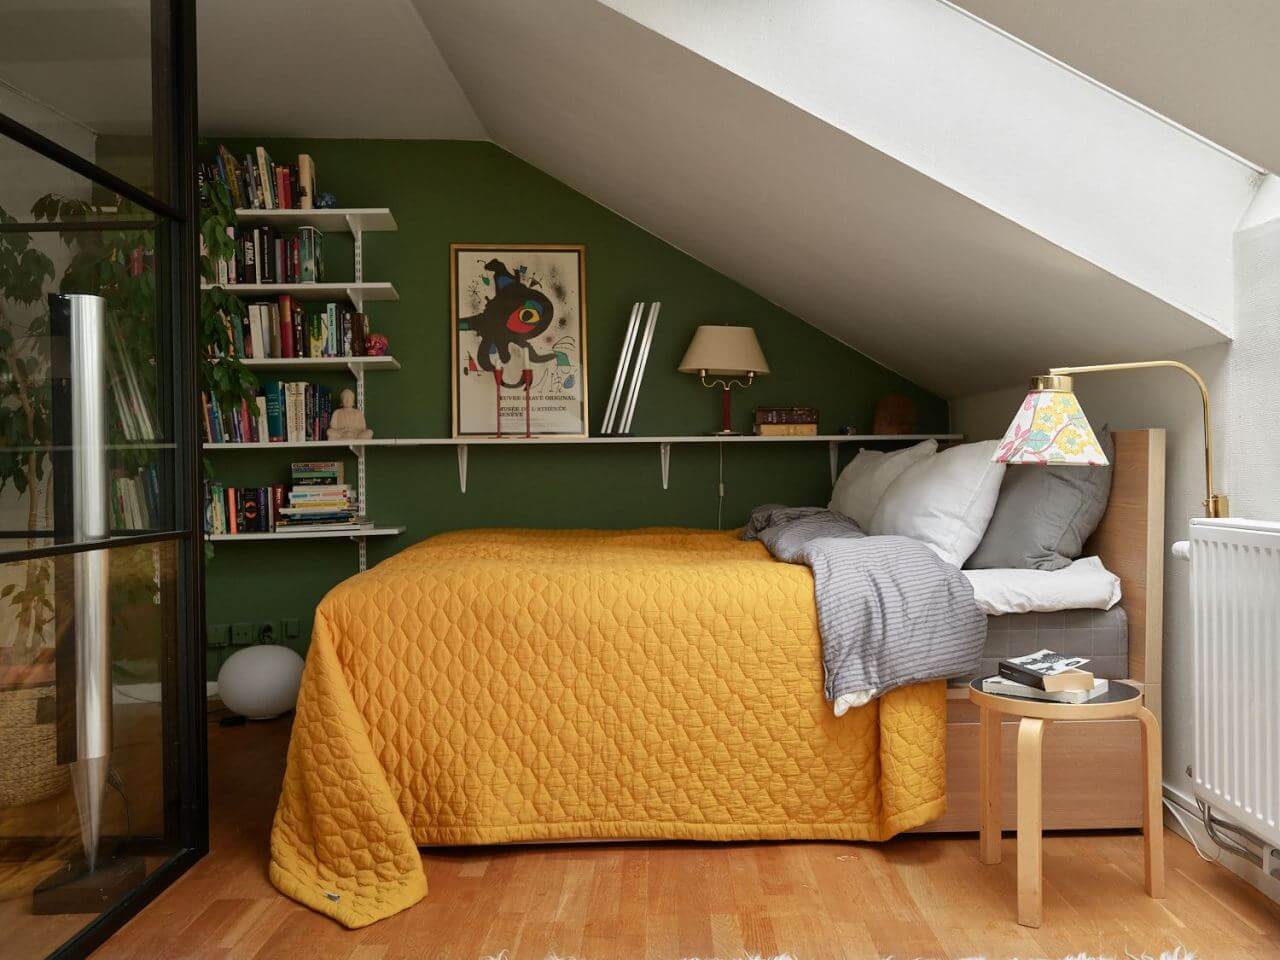 green-yellow-bedroom-shelves-slanted-ceiling-nordroom